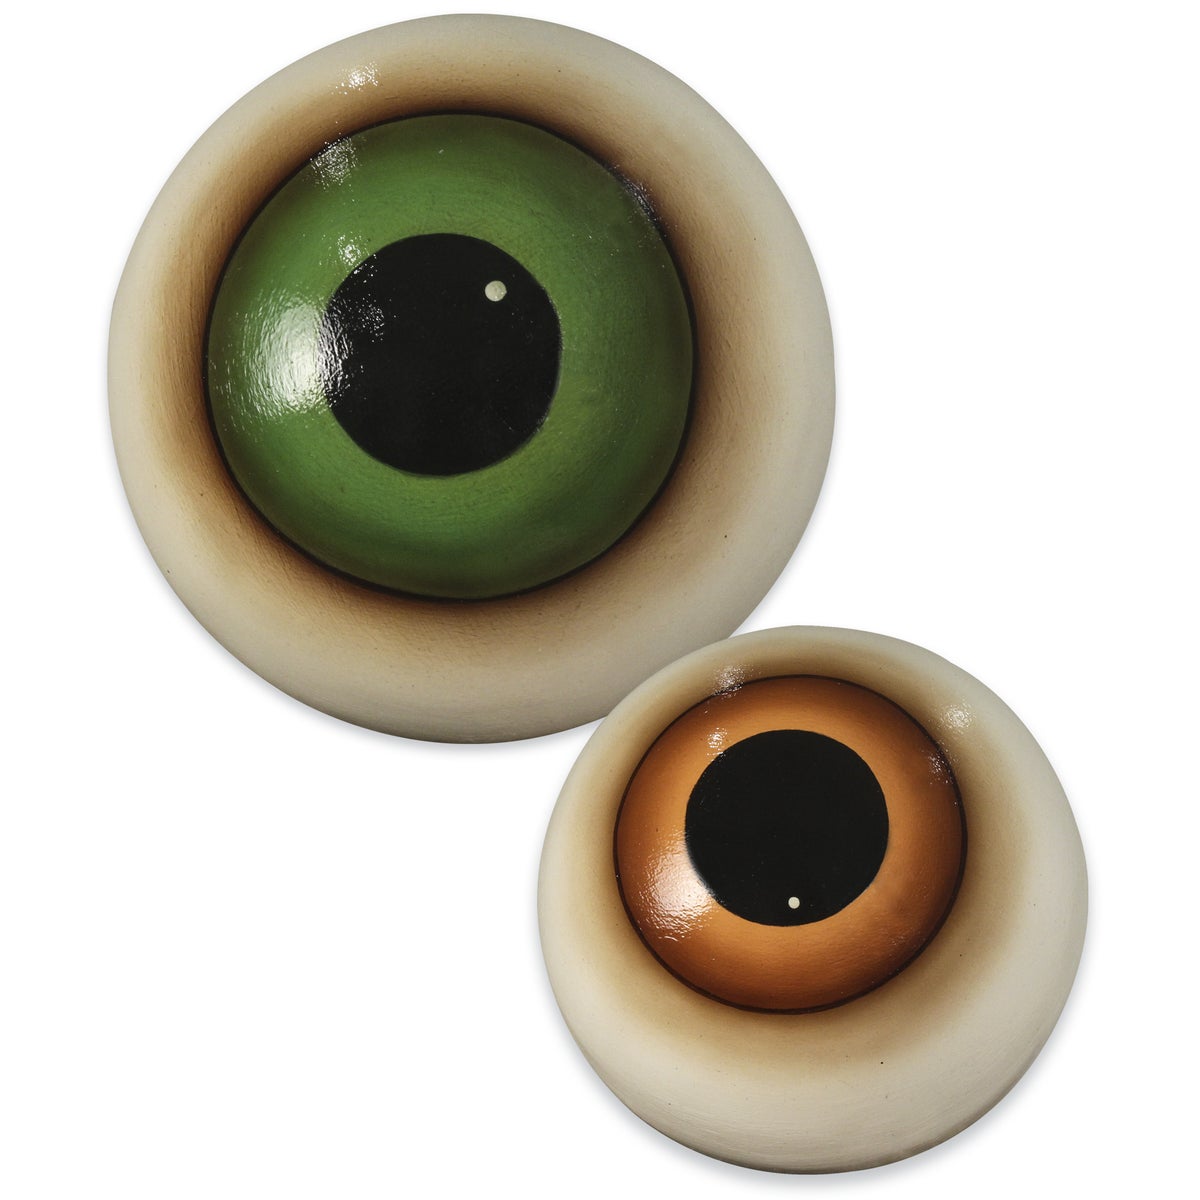 Large Eyeballs S2